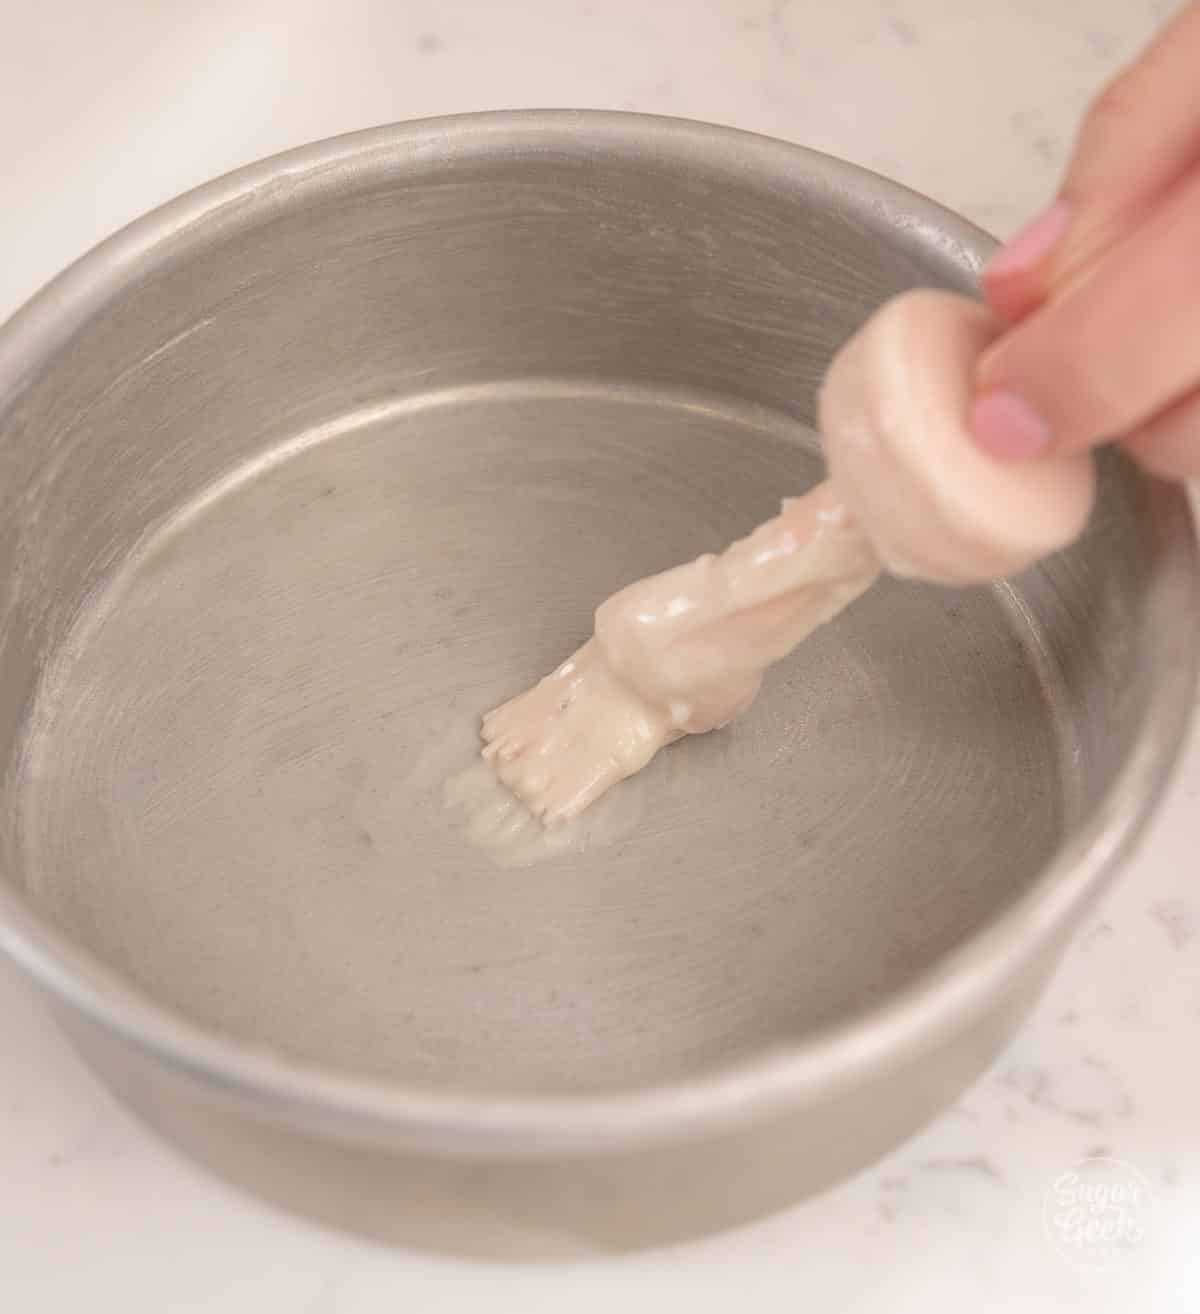 spreading cake goop into a cake pan